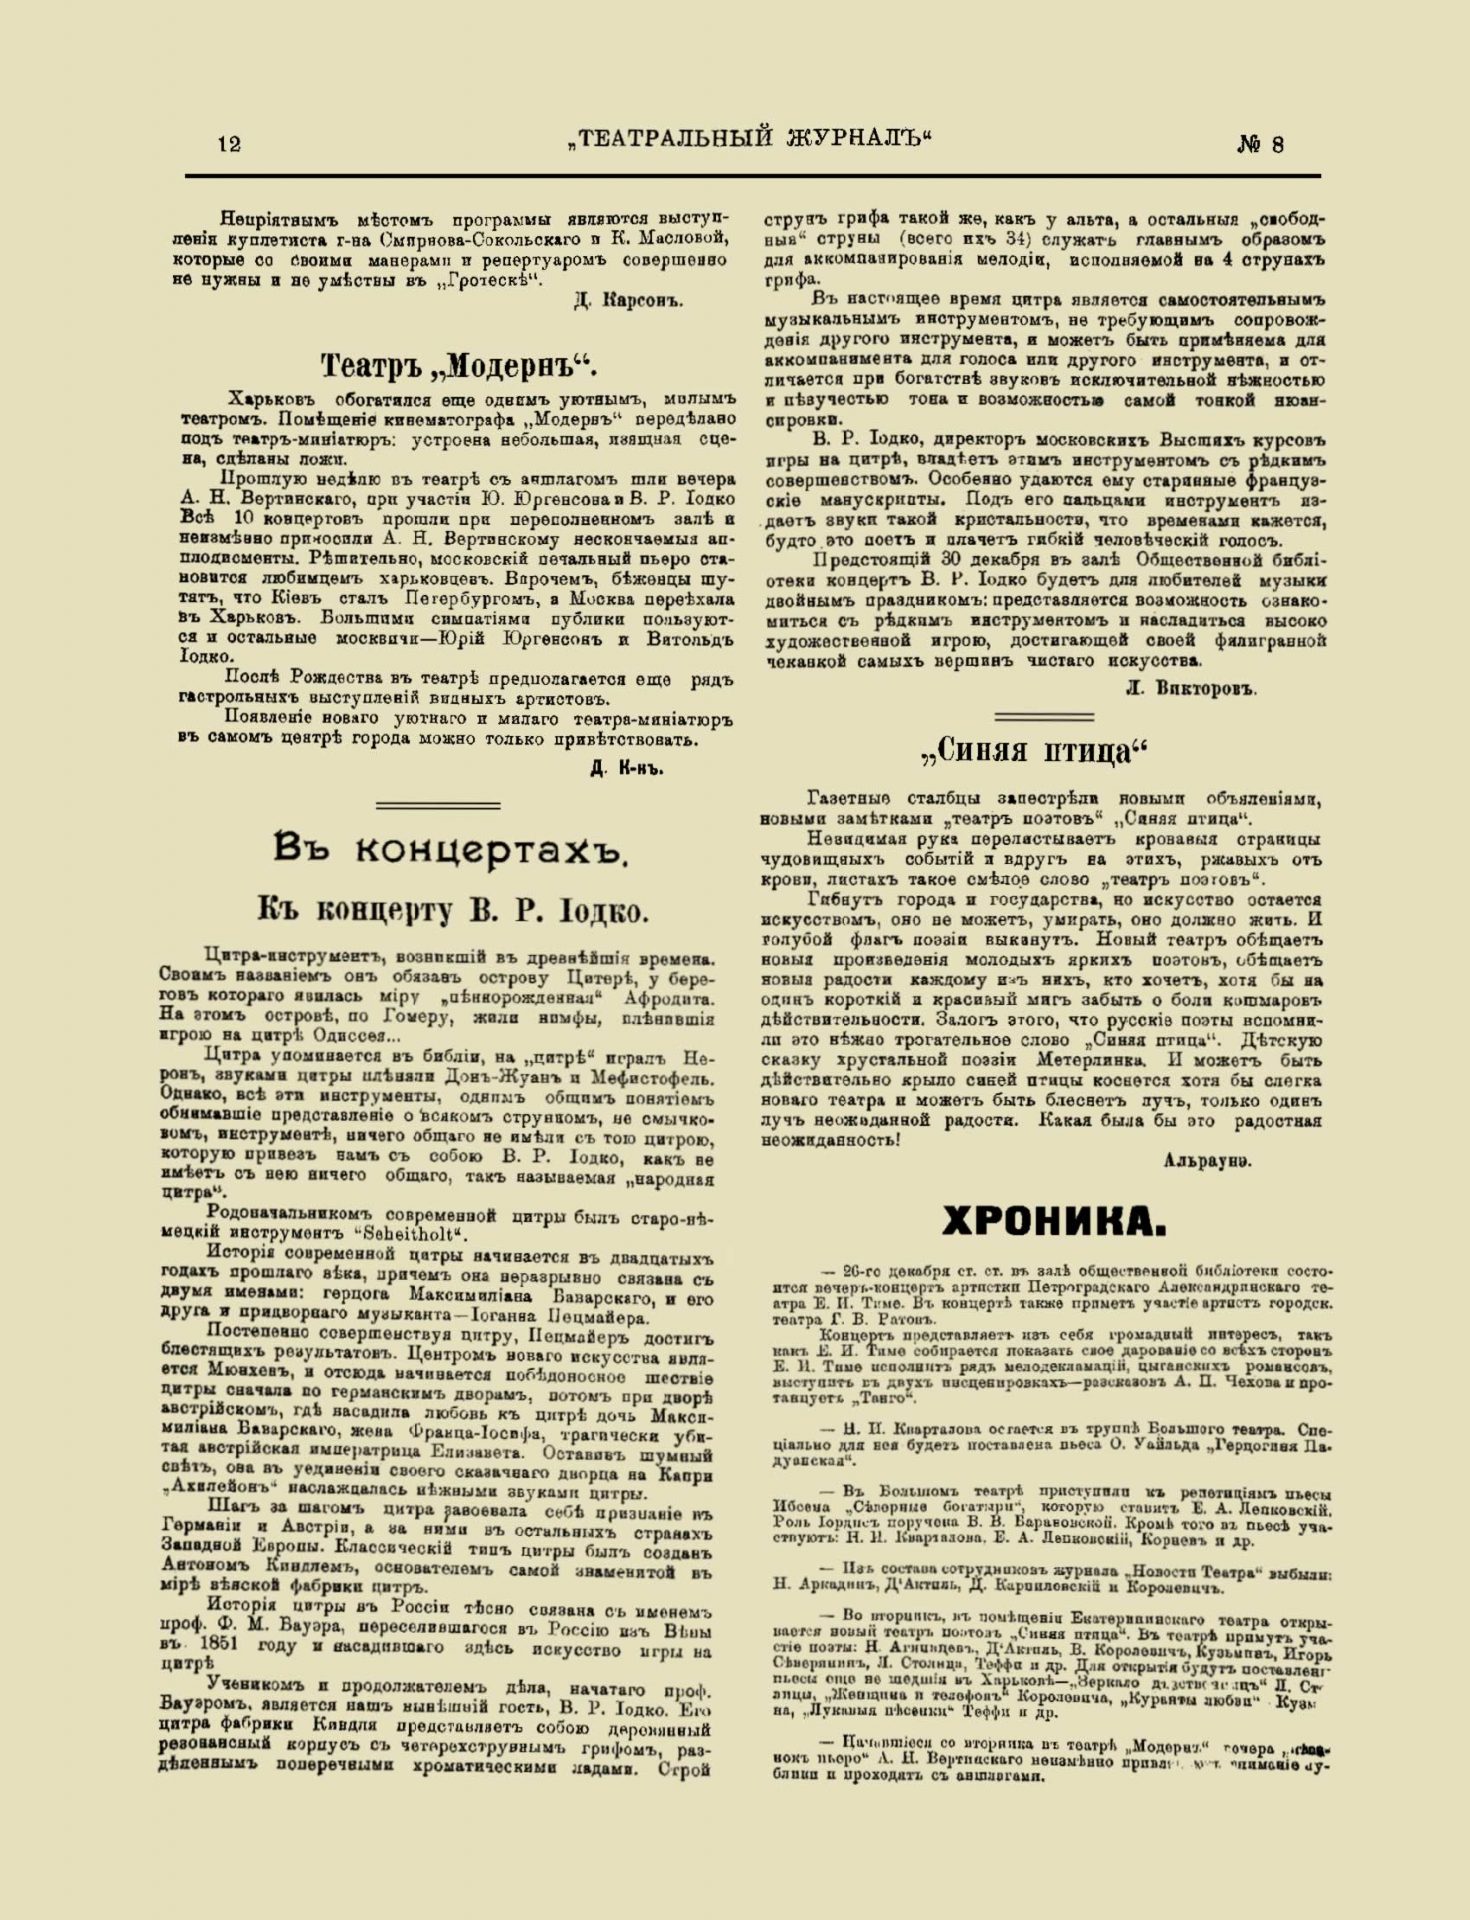 Театральный журнал_1918_№8